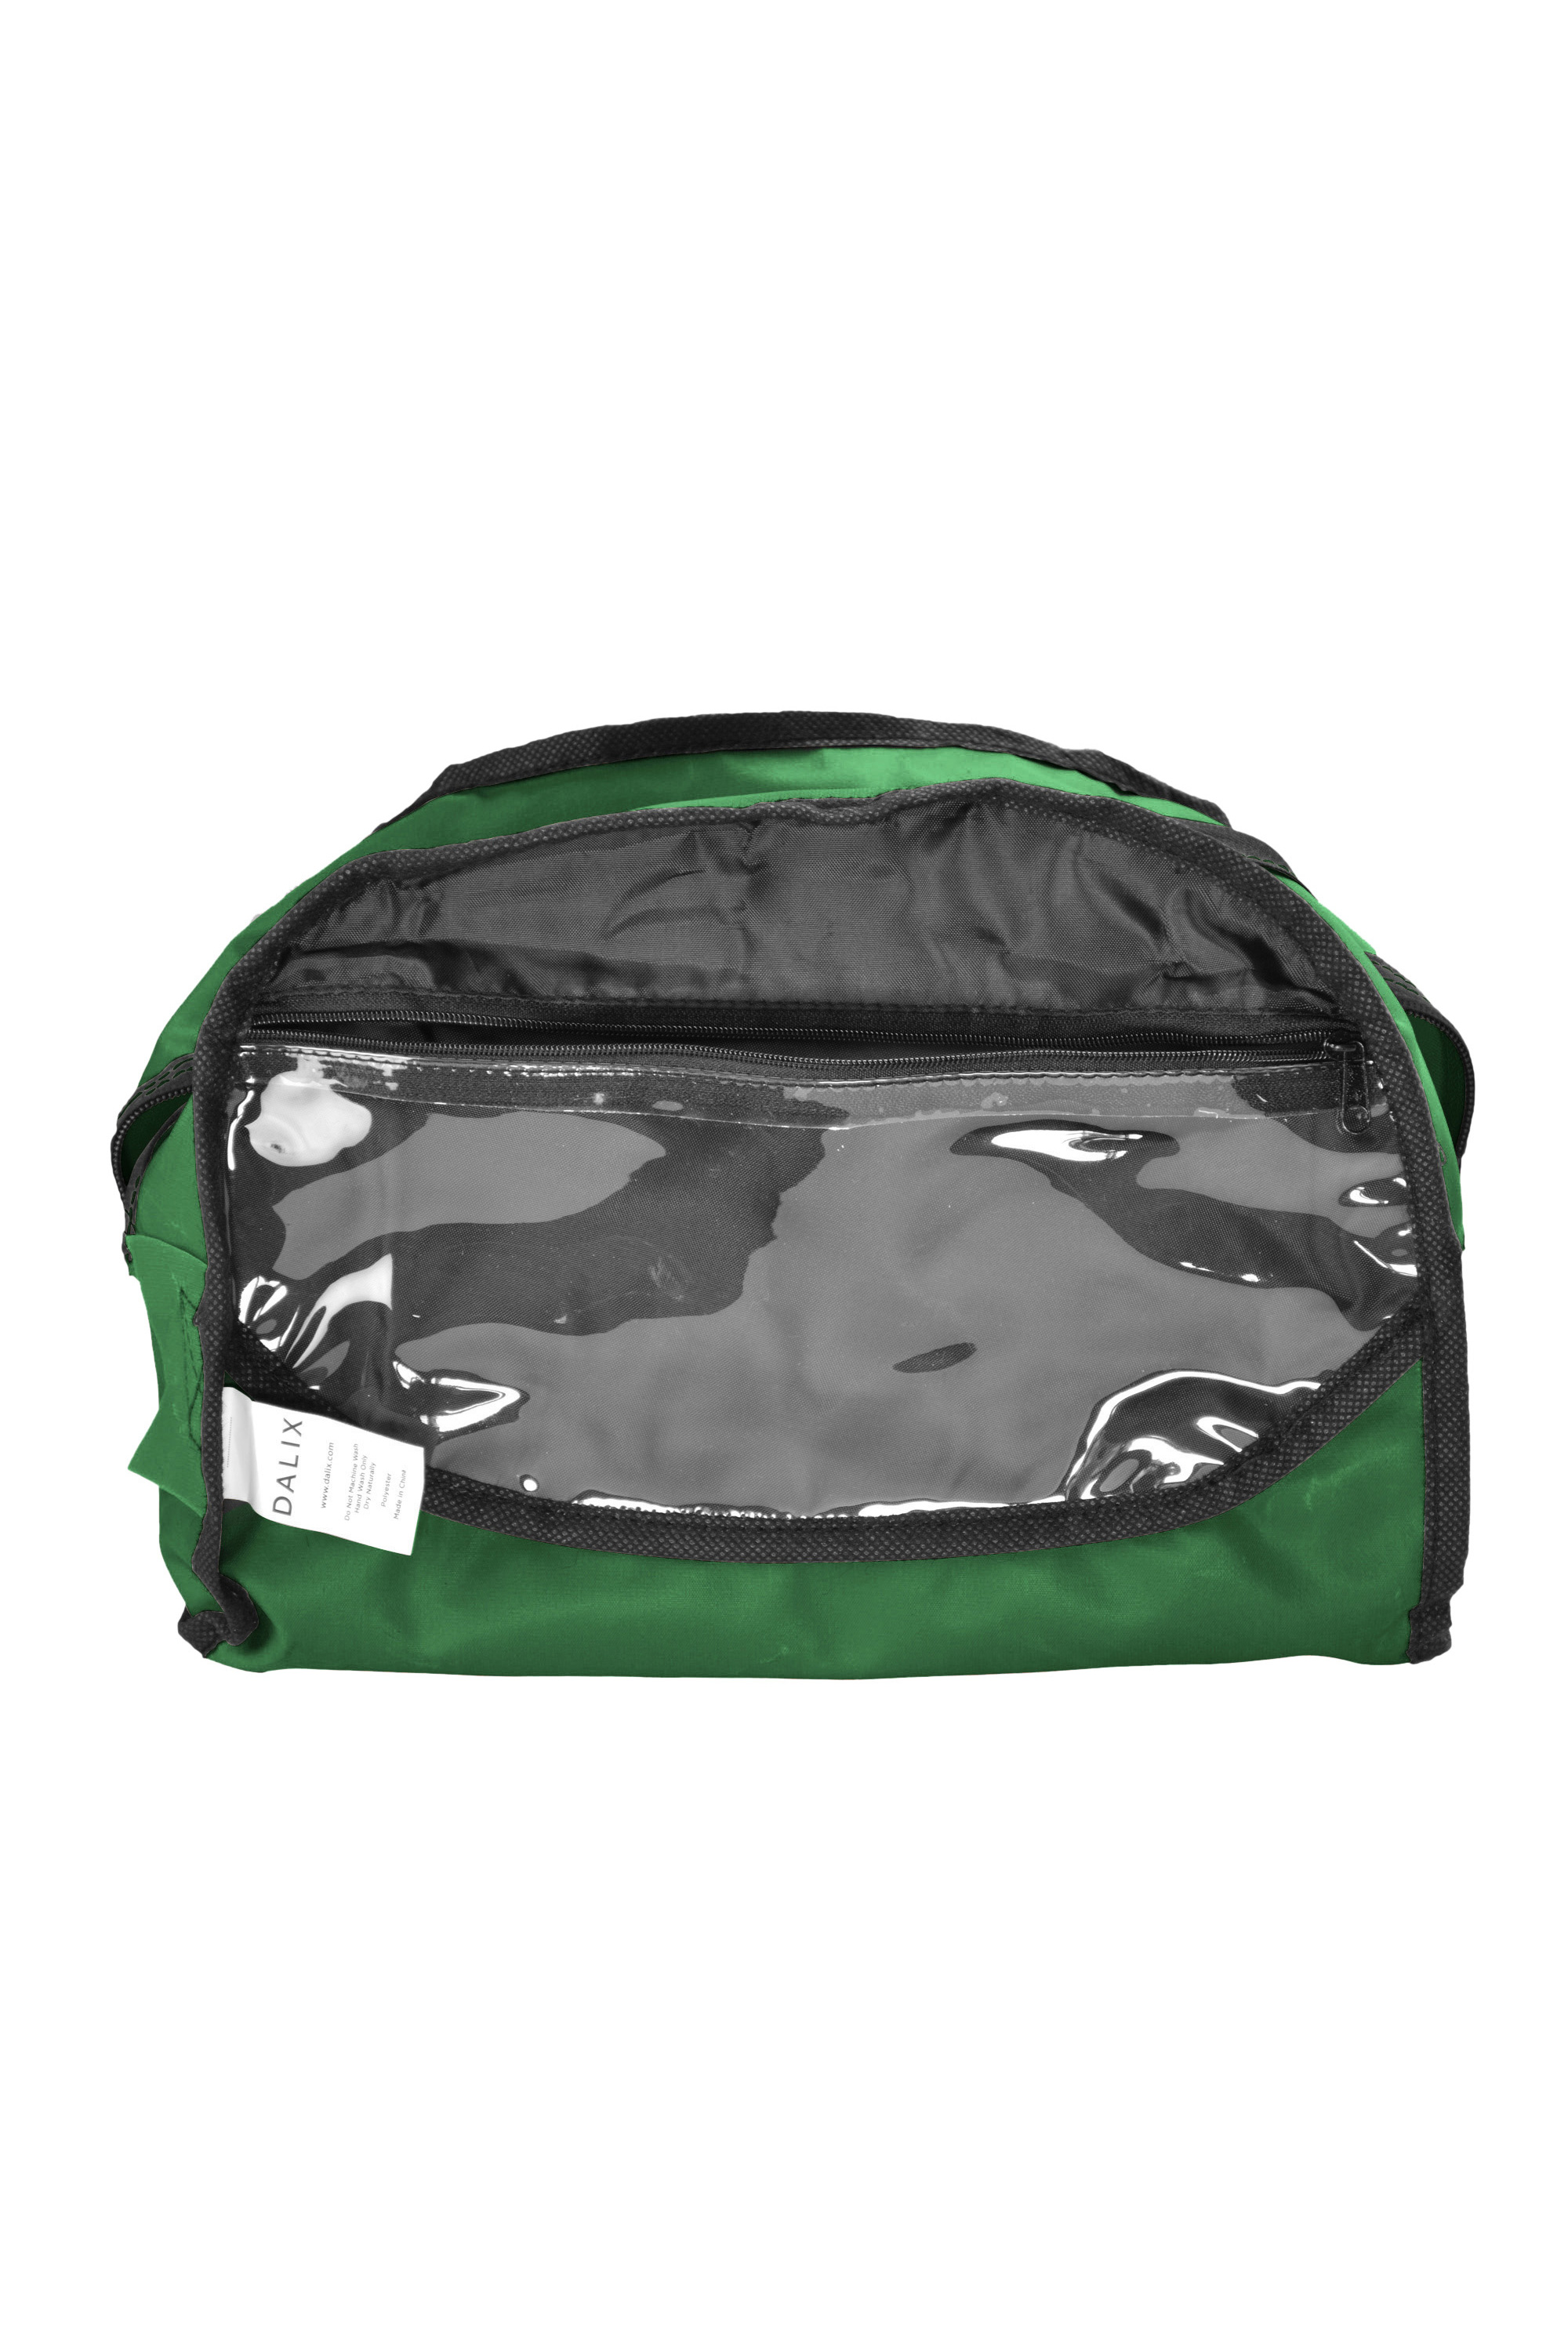 DALIX 12" Mini Two Tone Duffle Bag (Dark Green) - image 4 of 7